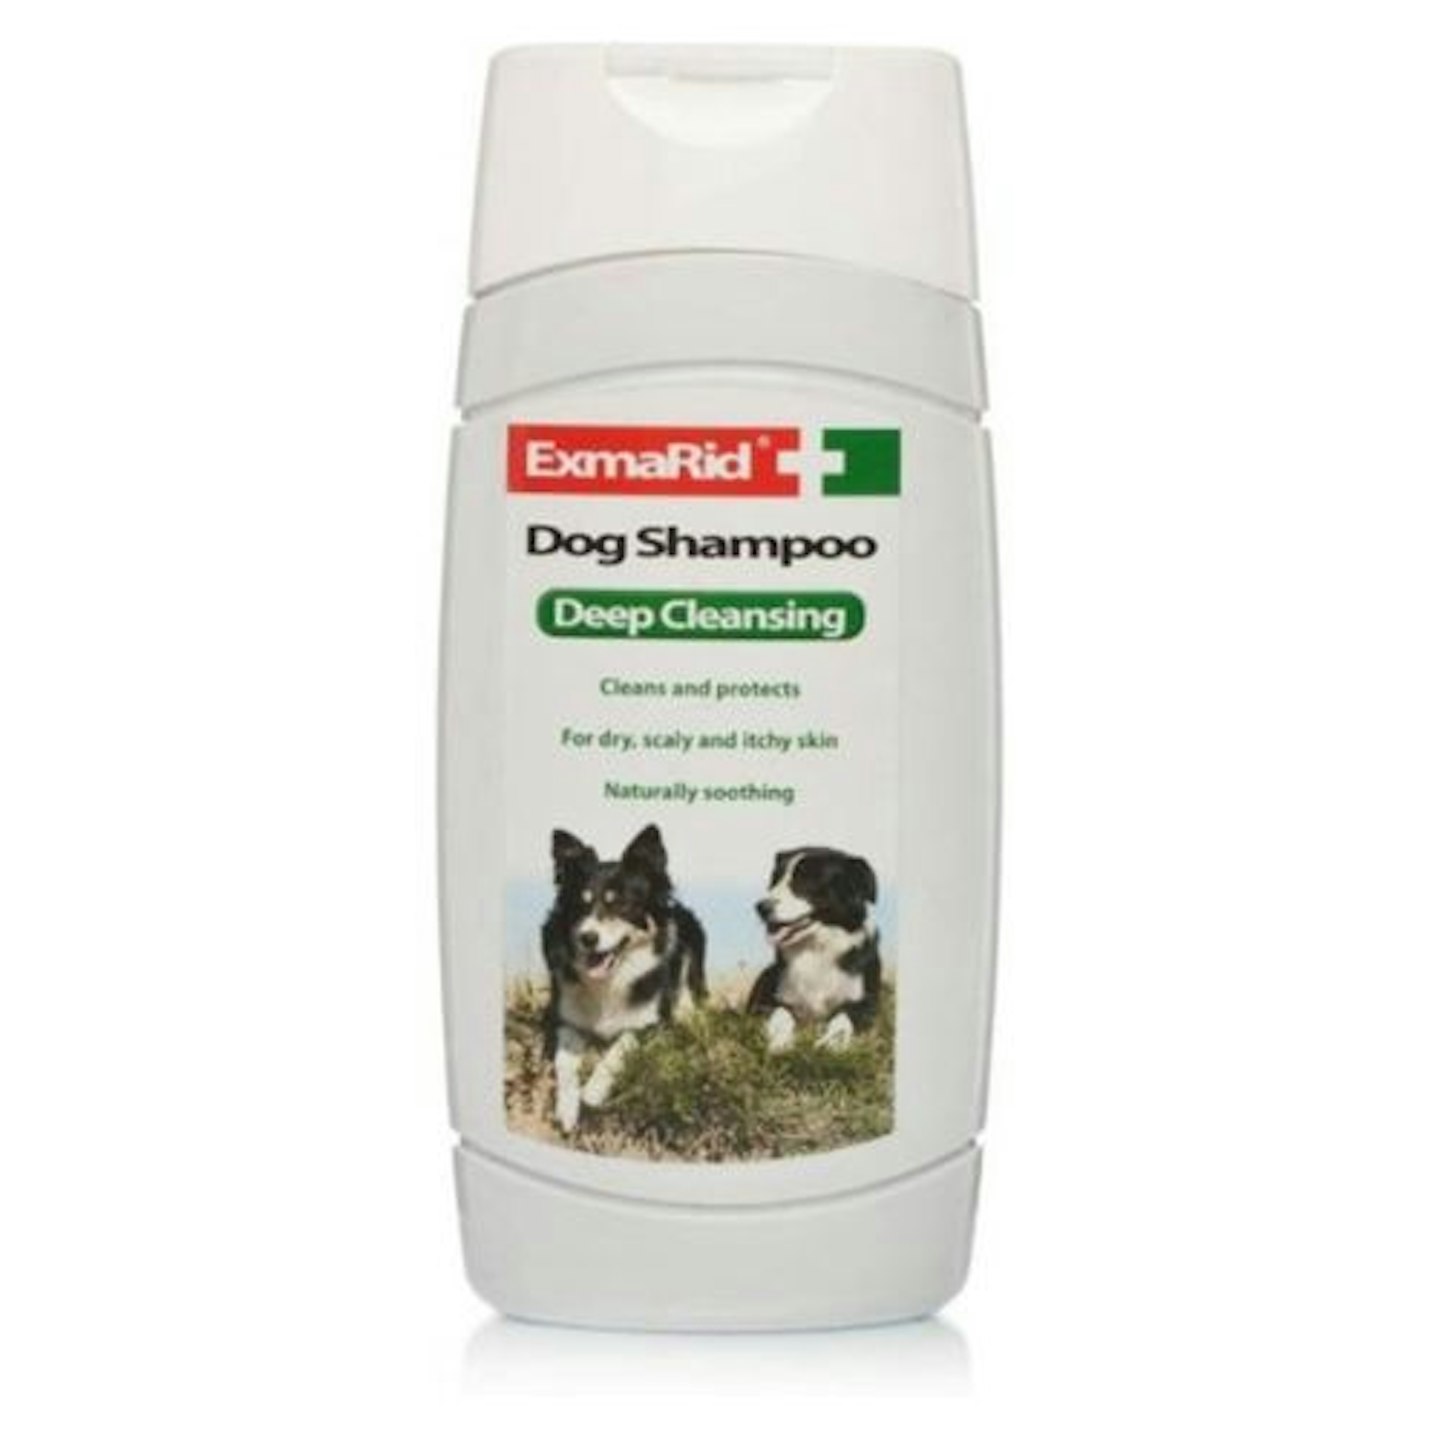 Exmarid Deep Cleansing Dog Shampoo